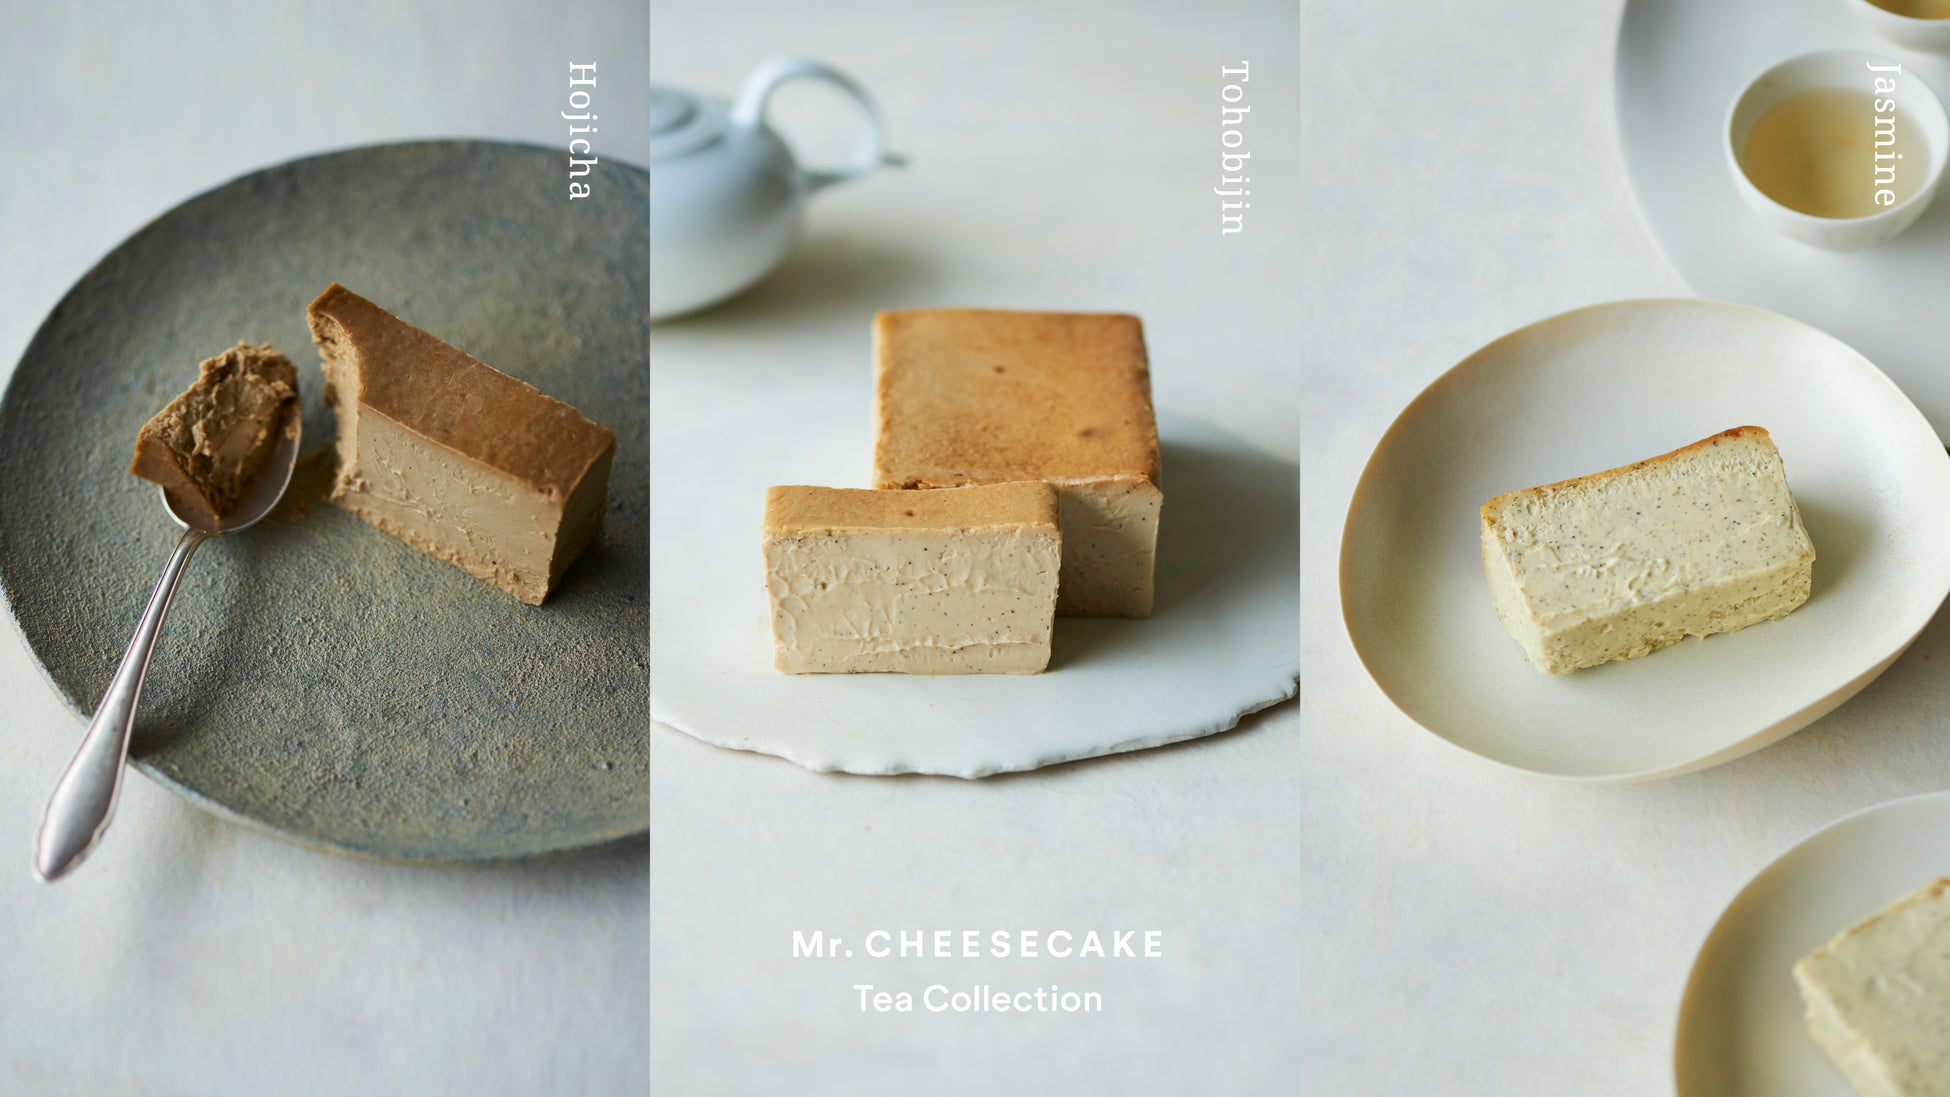 Mr. CHEESECAKEから、香り豊かなお茶フレーバー3種「Mr. CHEESECAKE Tea Collection」が新登場